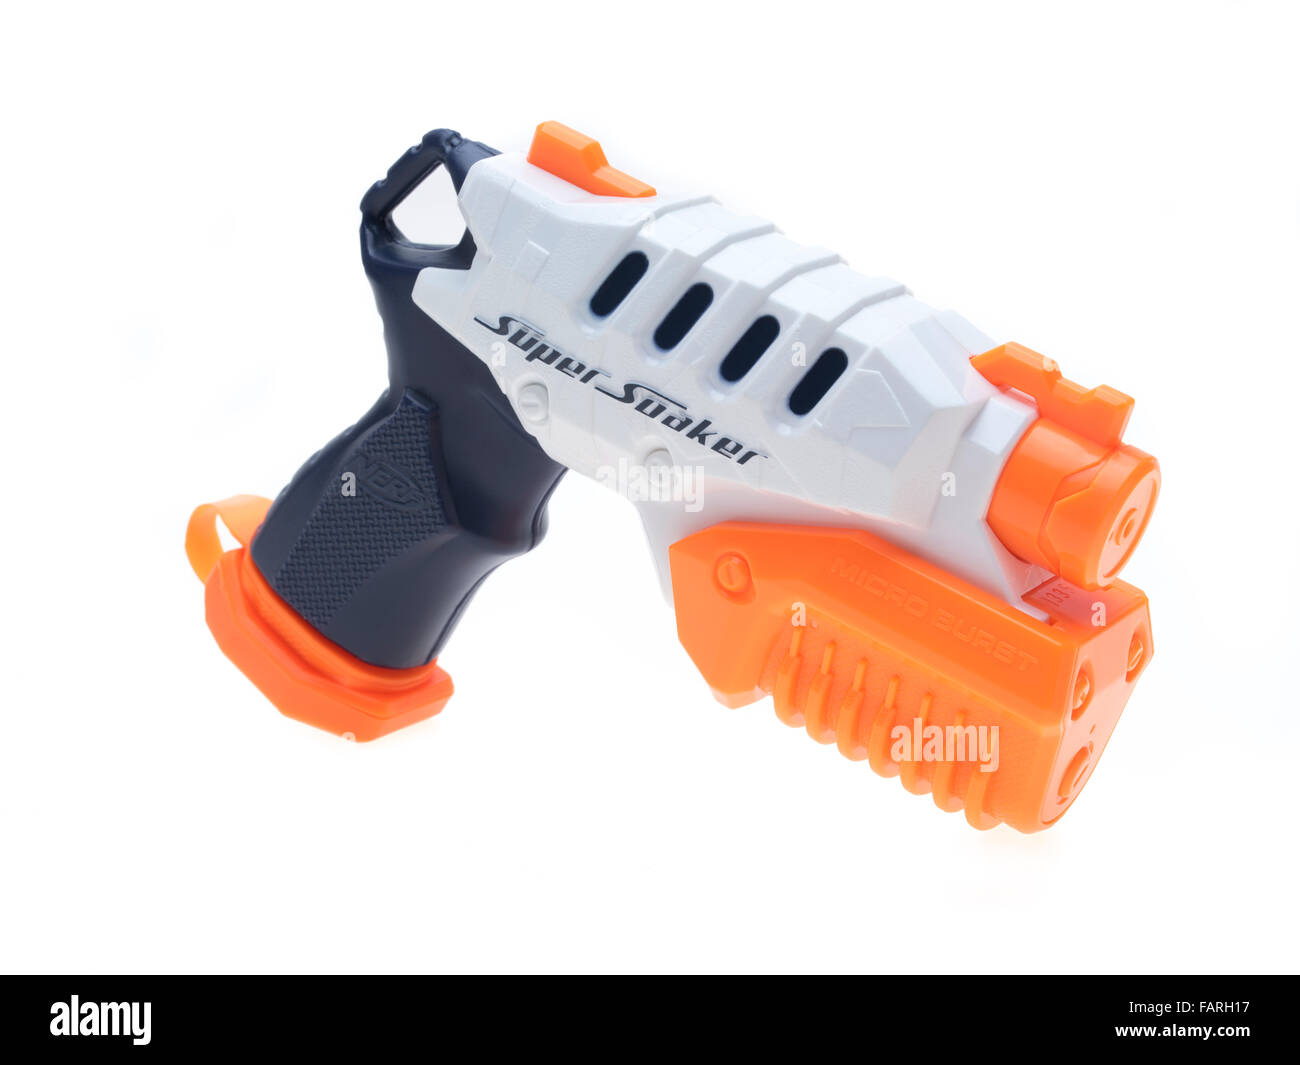 Super Soaker water gun by Nerf / Hasbro. Stock Photo